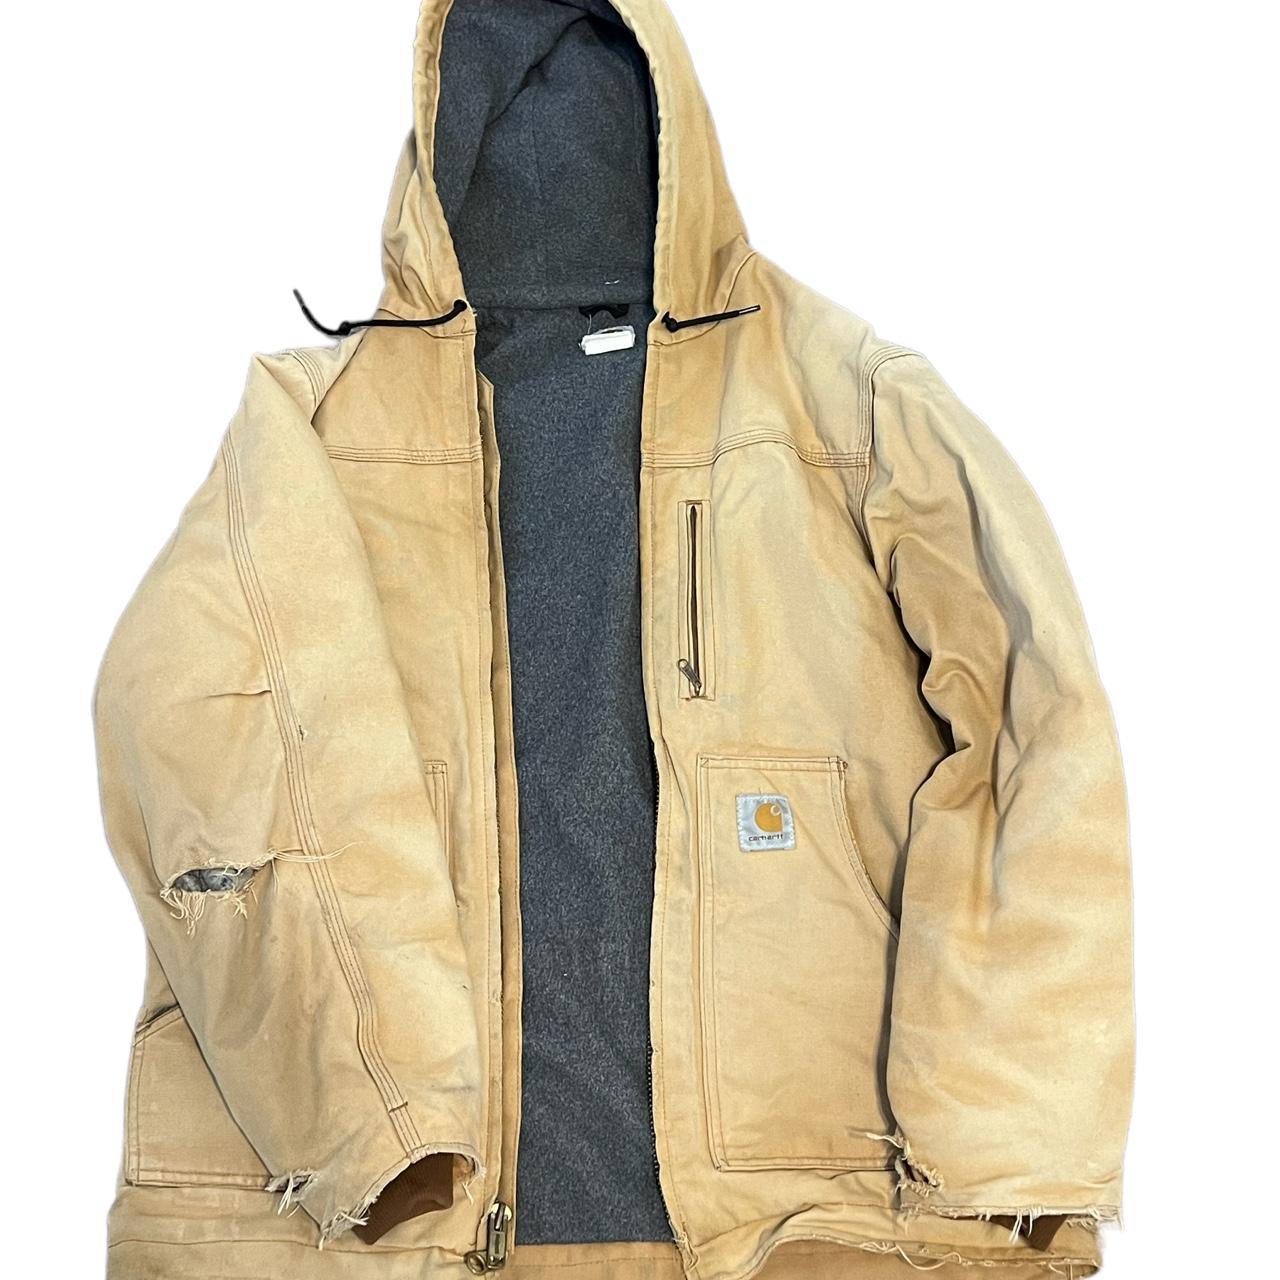 Used Carhartt jacket! - Depop